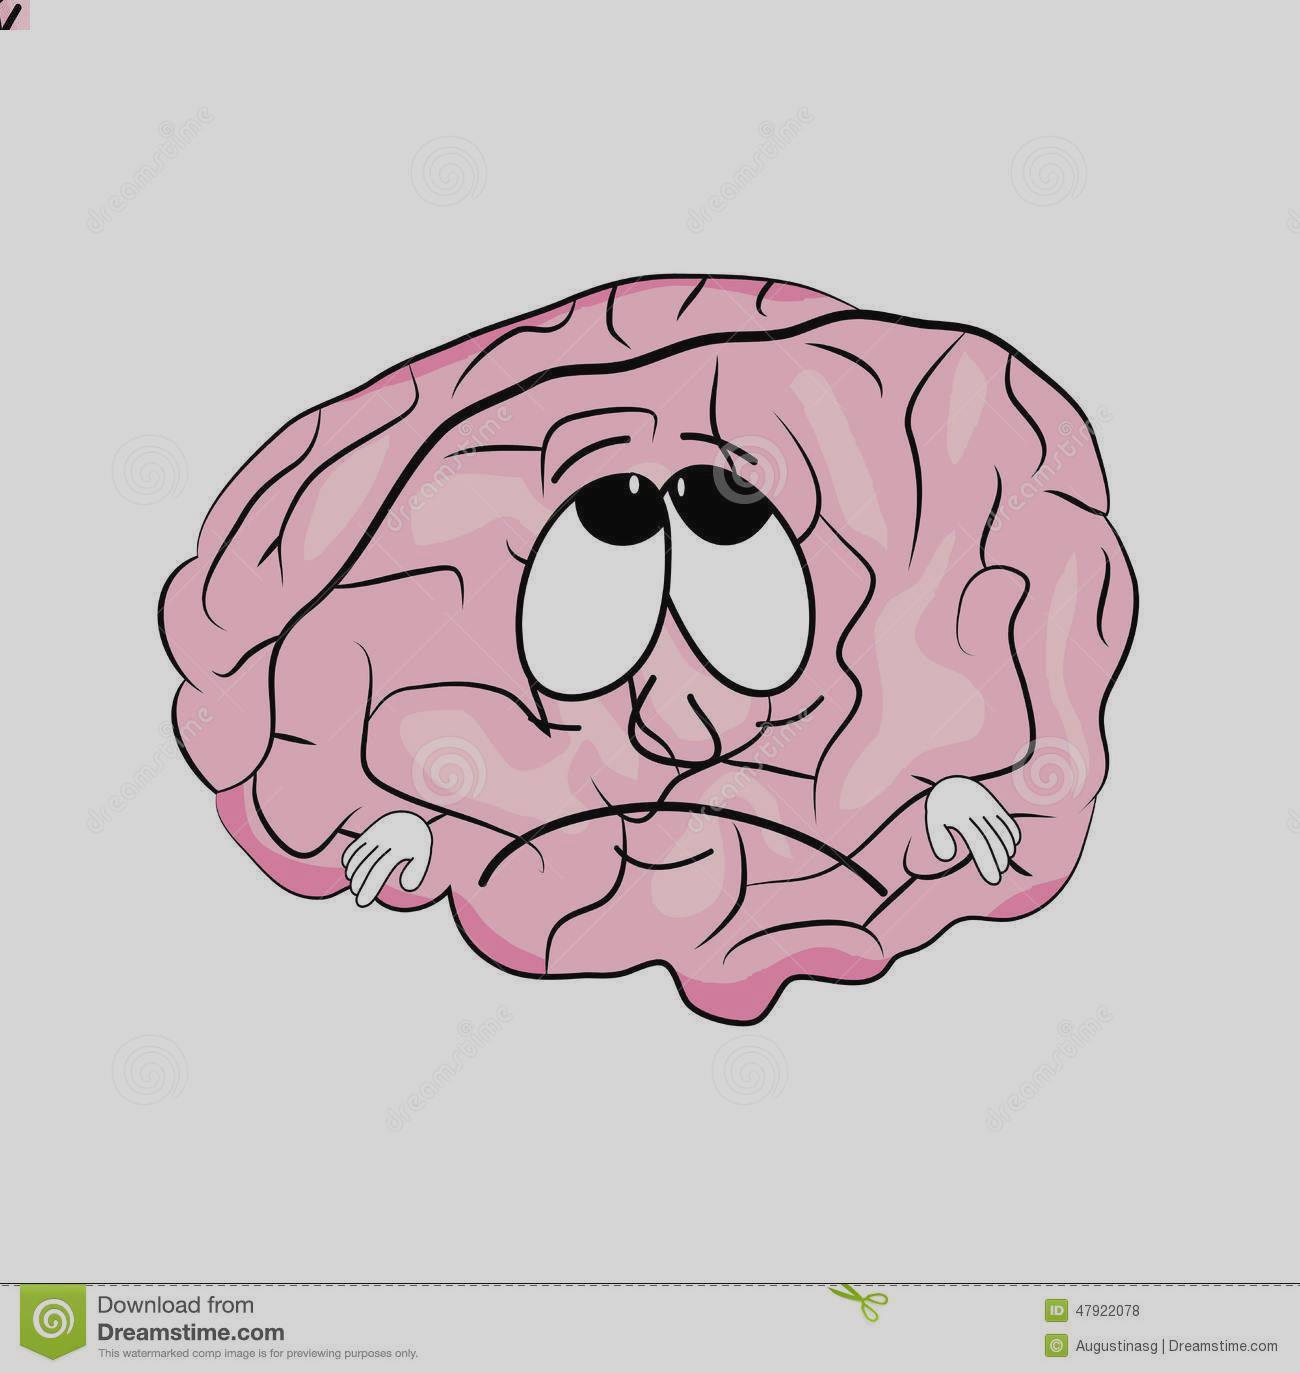 Brain clipart illustration, Brain illustration Transparent FREE for ...